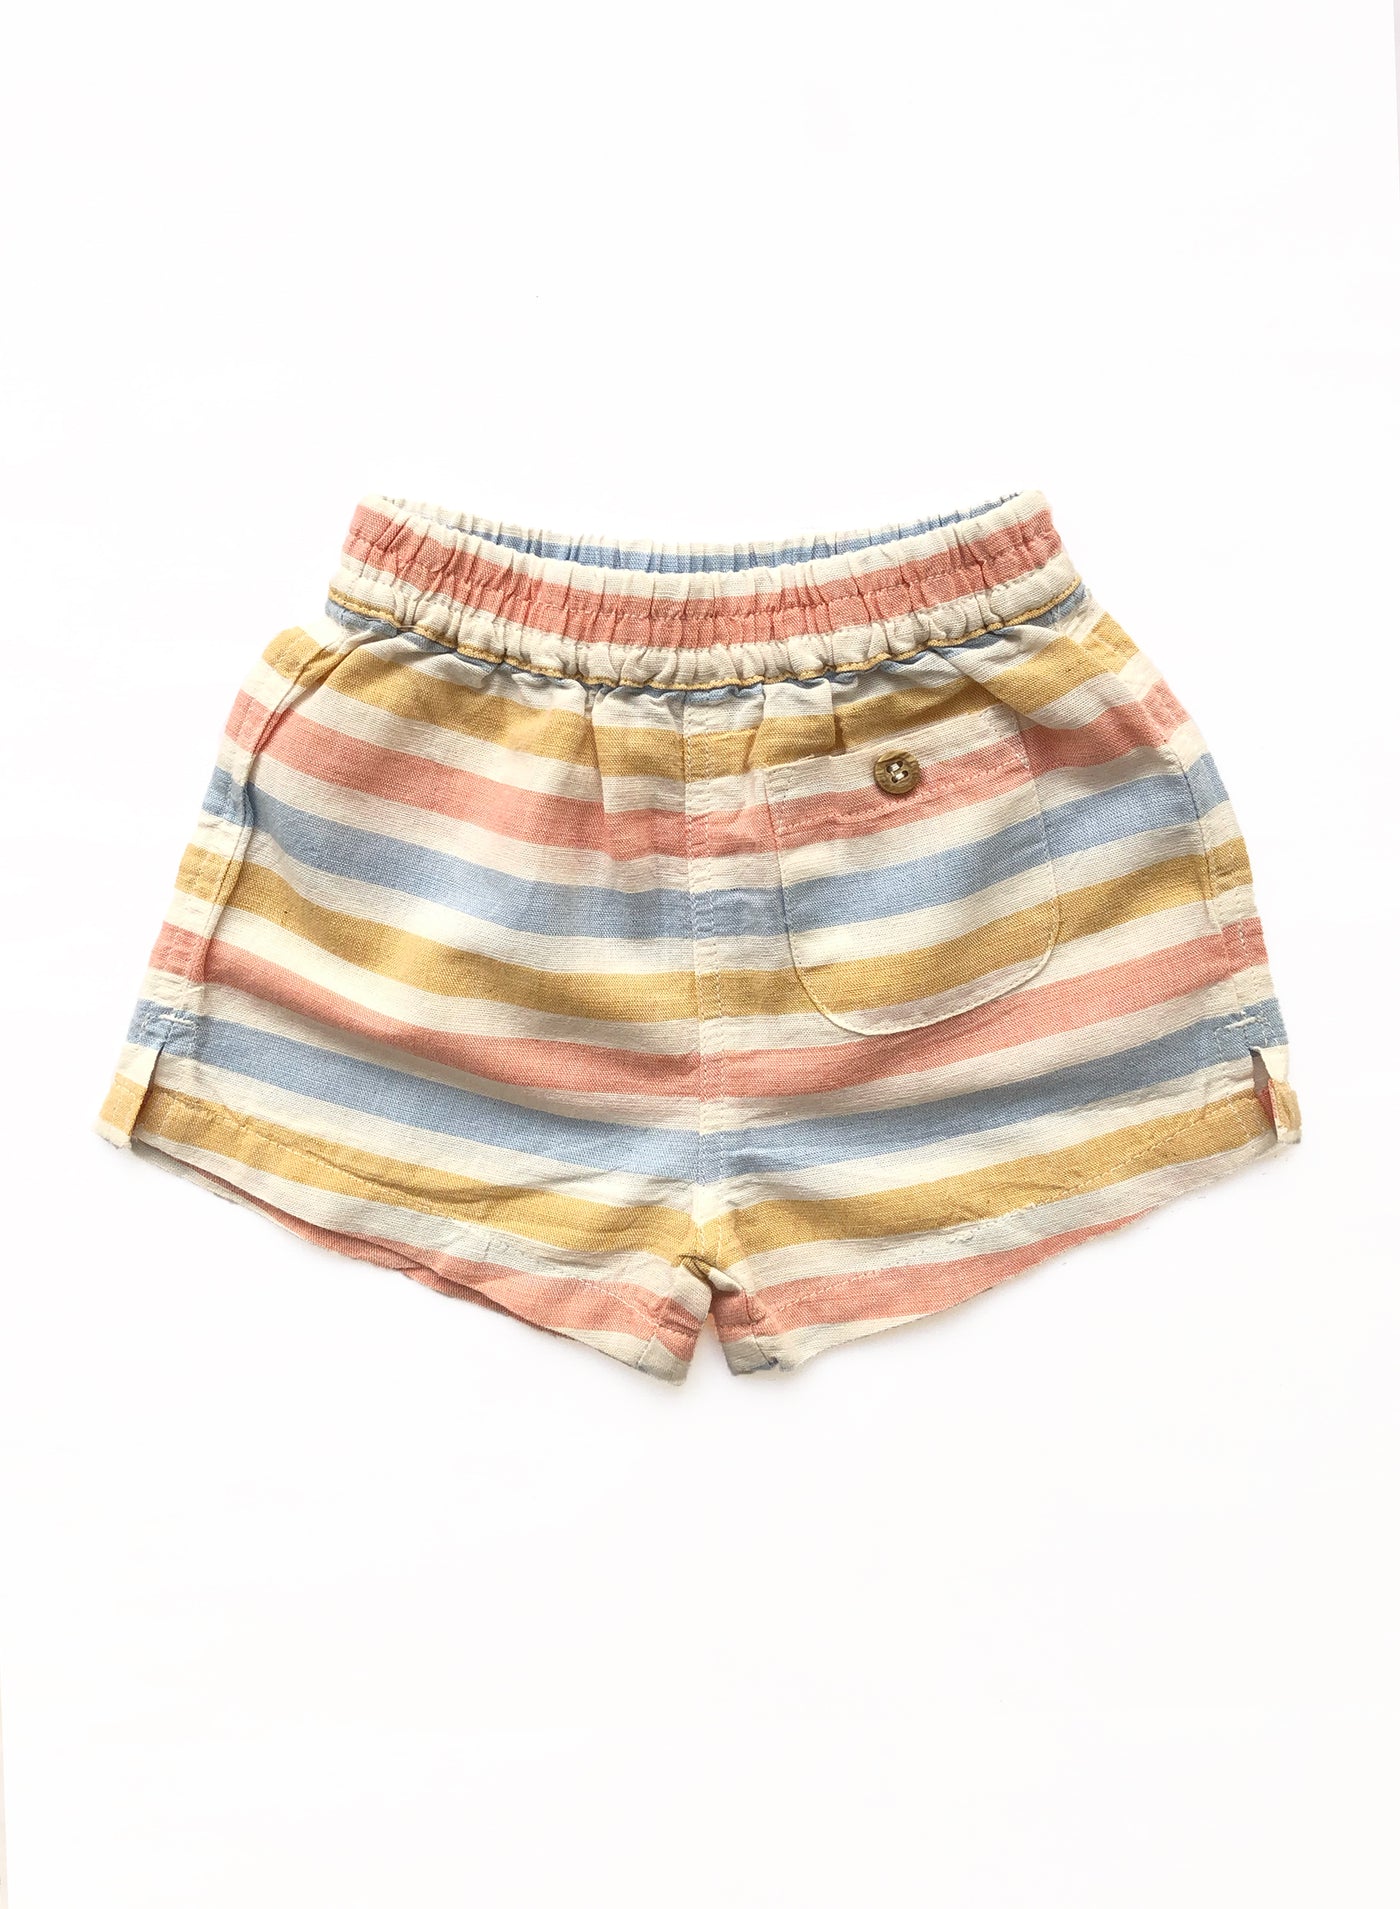 Striped Shorts